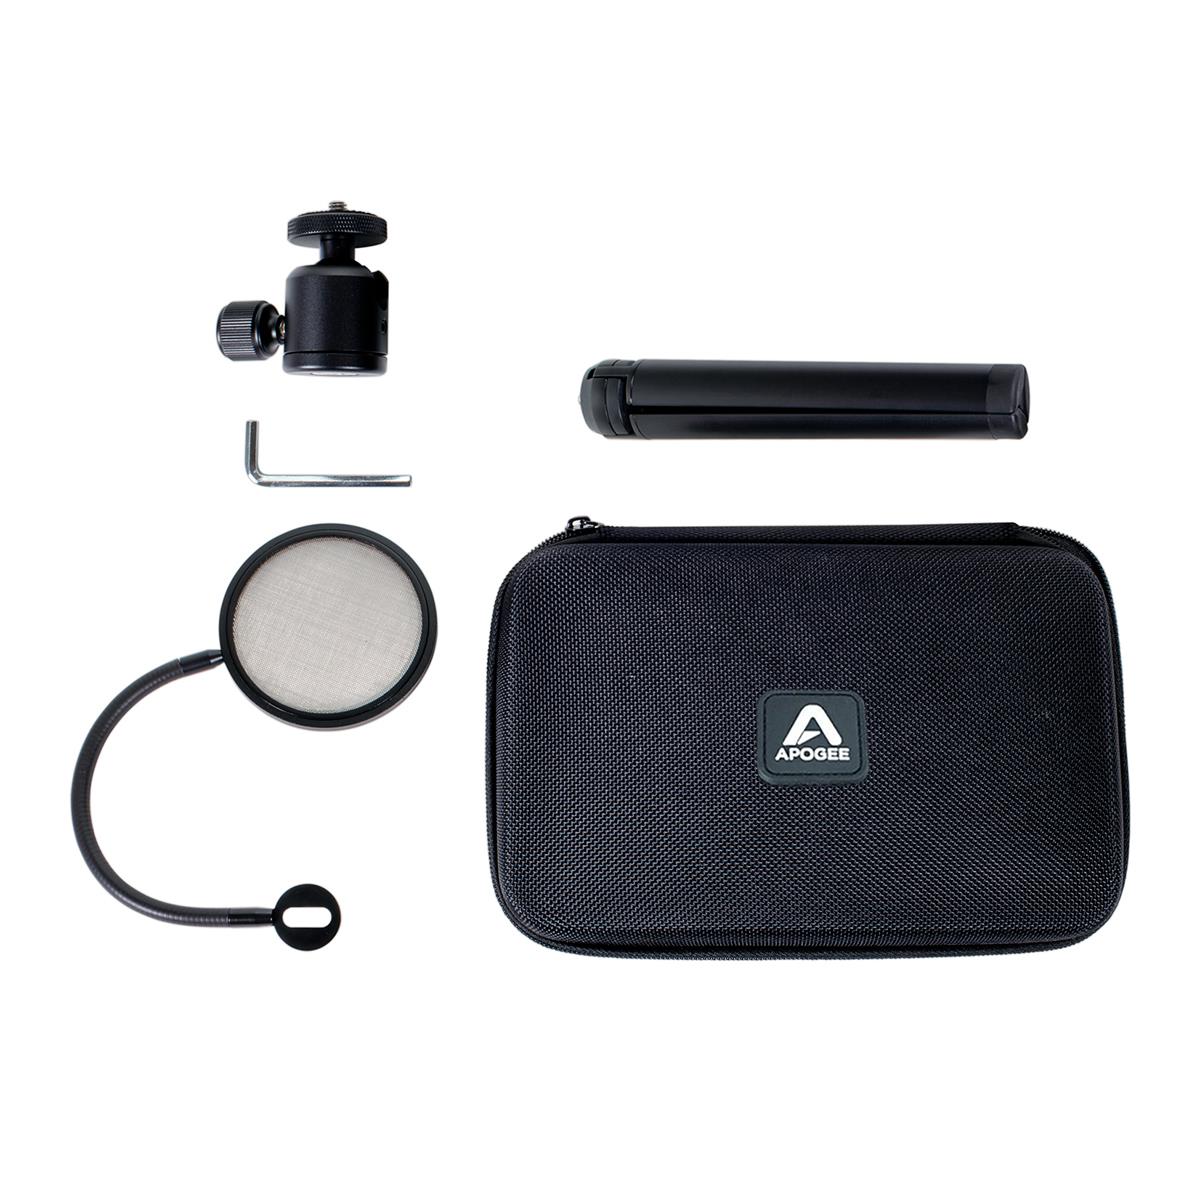 Apogee Electronics Premium Mic Accessories Bundle with Tripod, Pop Filter & Case -  MICROPHONE ACCESSORIES BU